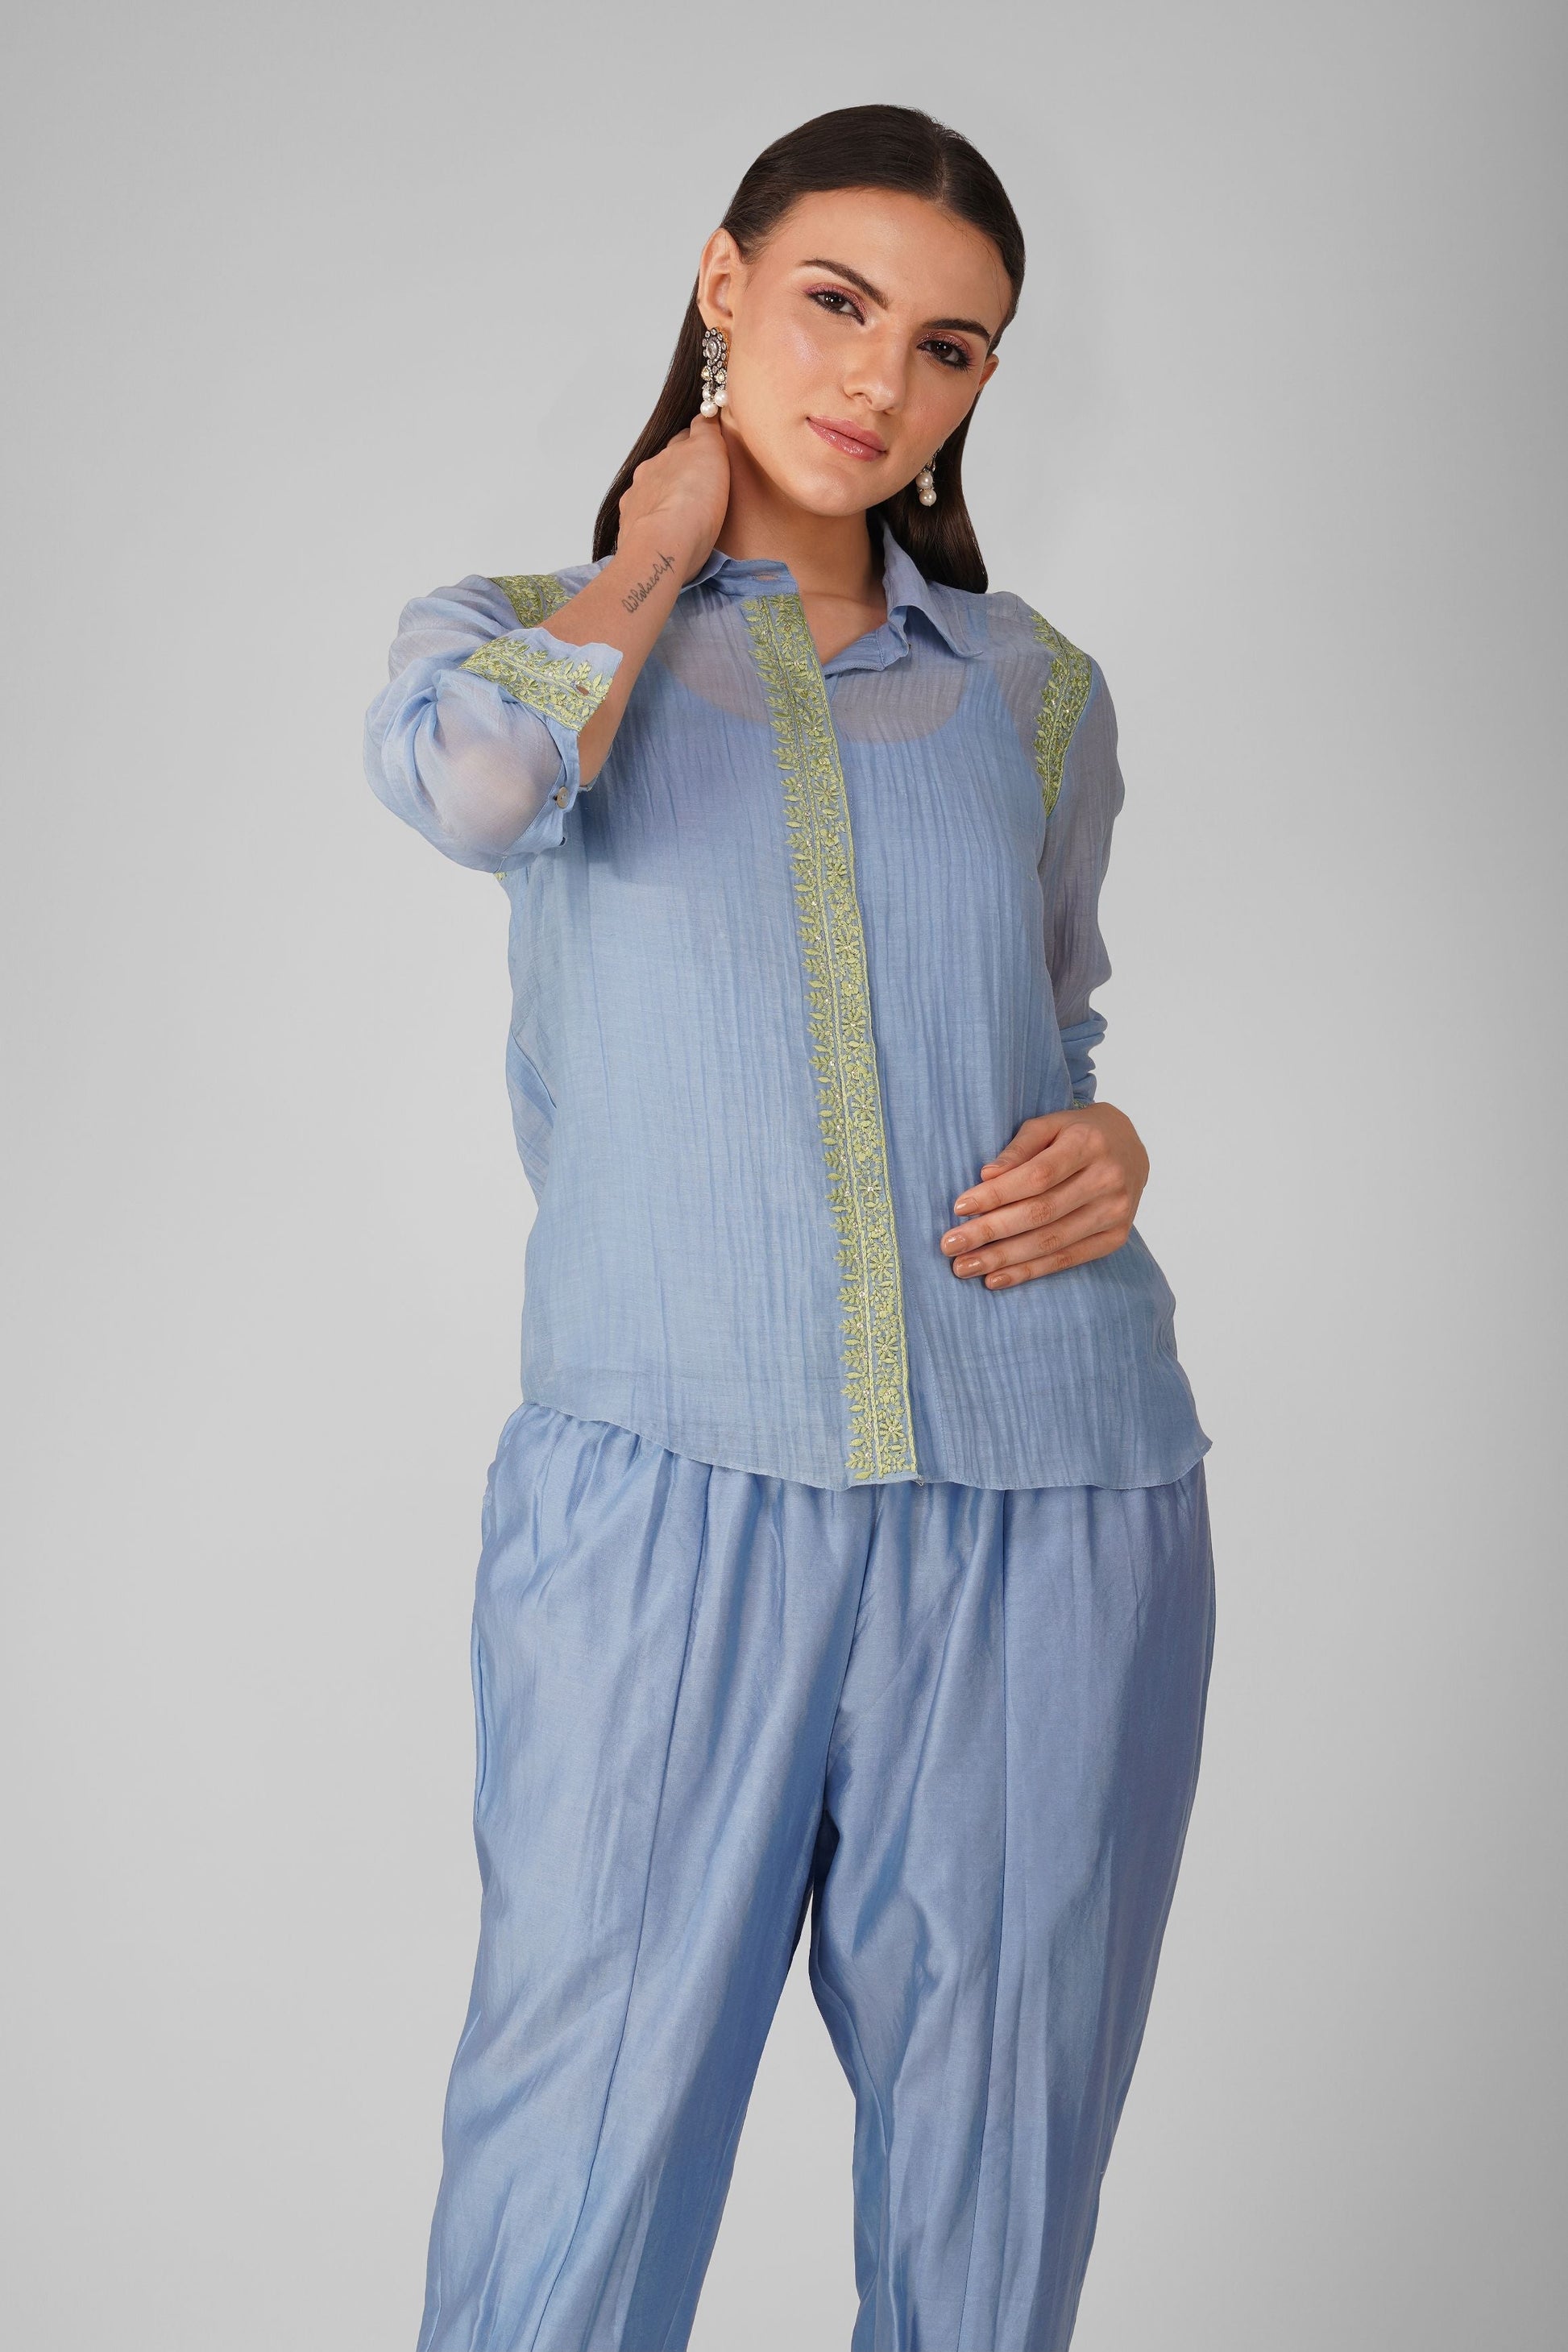 Blue Chanderi Shirt at Kamakhyaa by Devyani Mehrotra. This item is Blue, Chanderi, Embellished, Indian Wear, Natural, Party Wear, Regular Fit, Womenswear